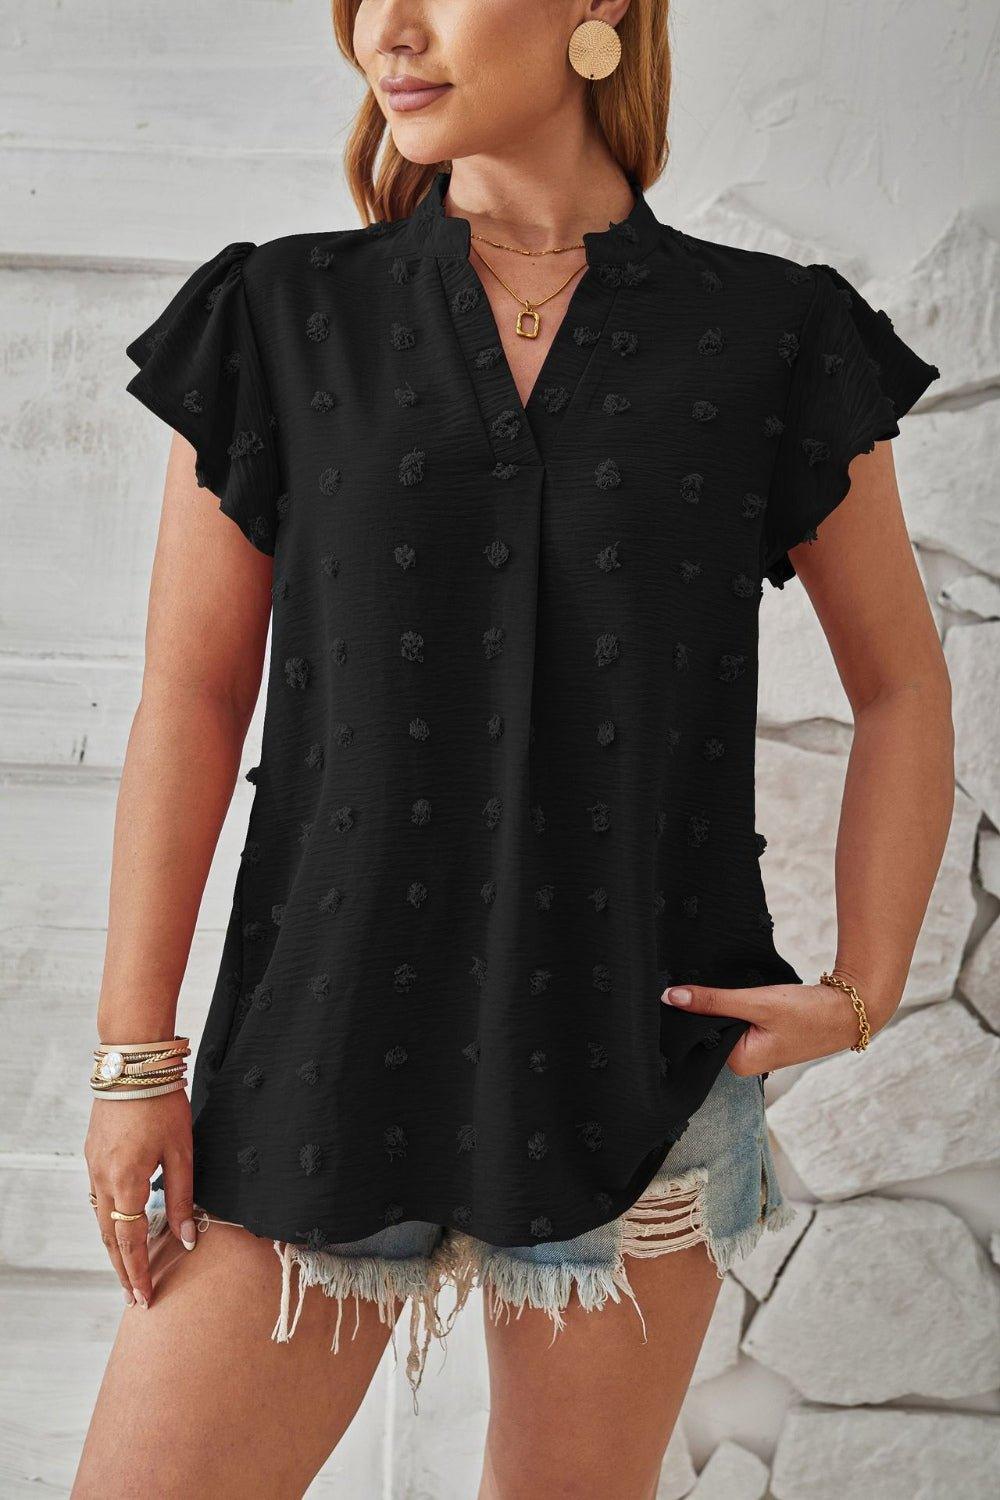 Bona Fide Fashion - Swiss Dot Notched Cap Sleeve T-Shirt - Women Fashion - Bona Fide Fashion